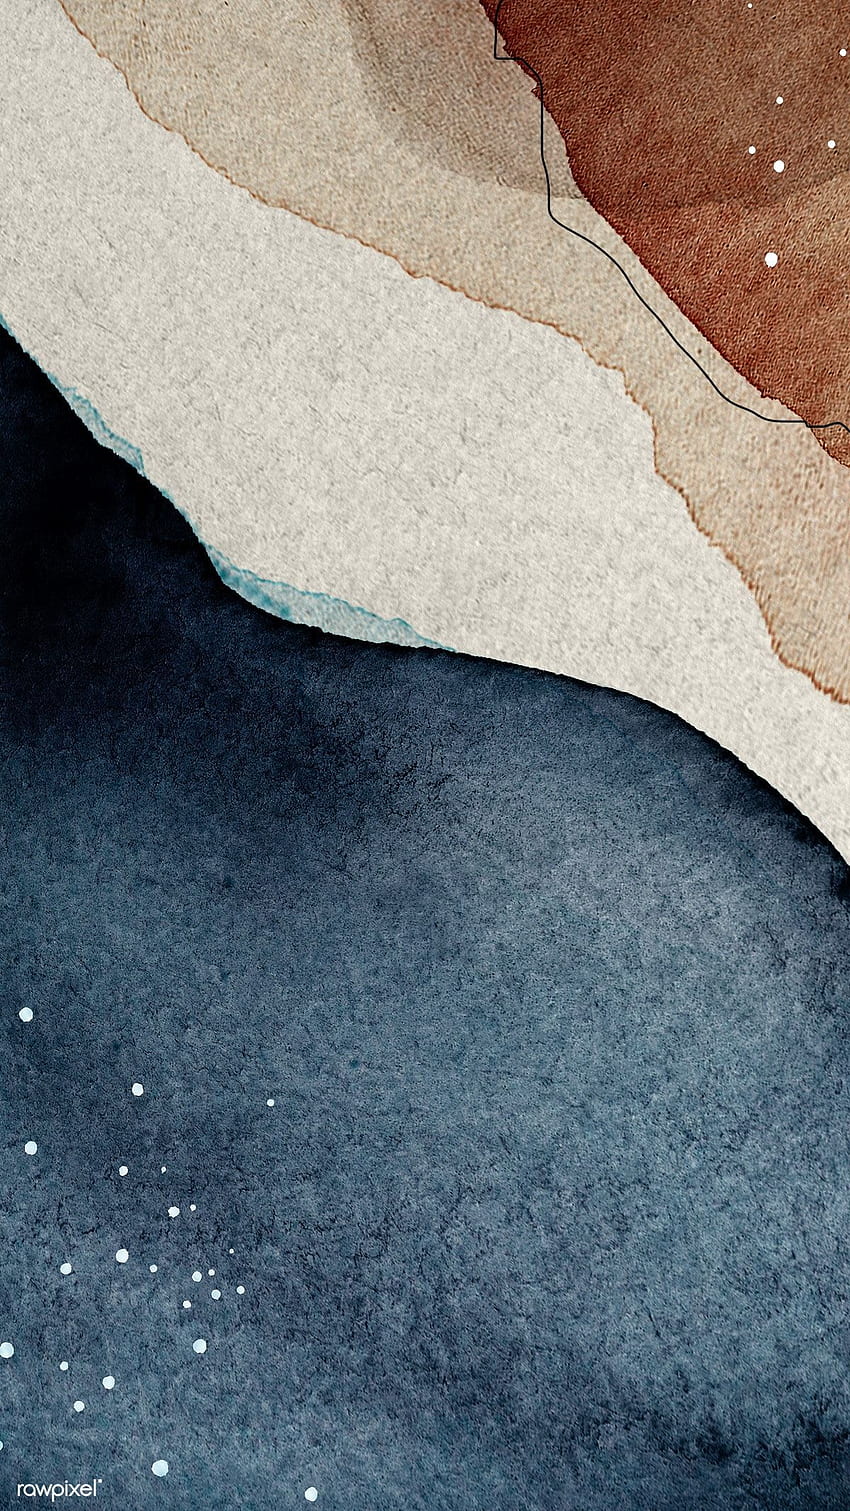 ilustración premium de teléfono móvil de pintura abstracta de tono tierra en 2020. Pintura abstracta acrílica moderna, Pintura abstracta pequeña, Pinturas de acuarela abstractas, Tonos terrestres fondo de pantalla del teléfono